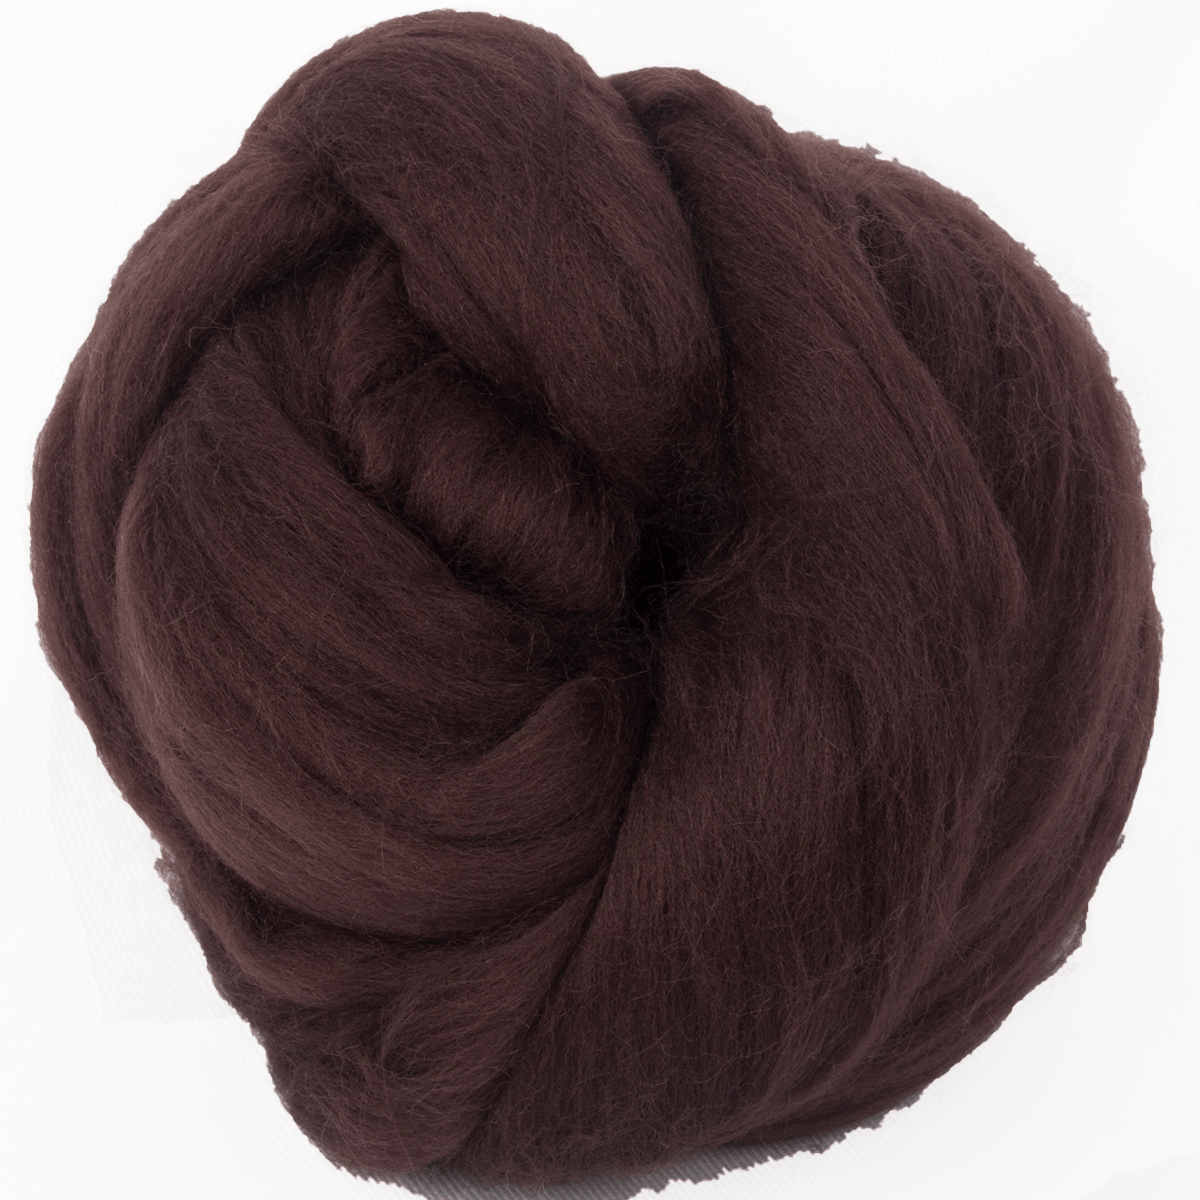 www.colourstreams.com.au Colour Streams Merino Wool Tops Chocolate Brown Roving Felting